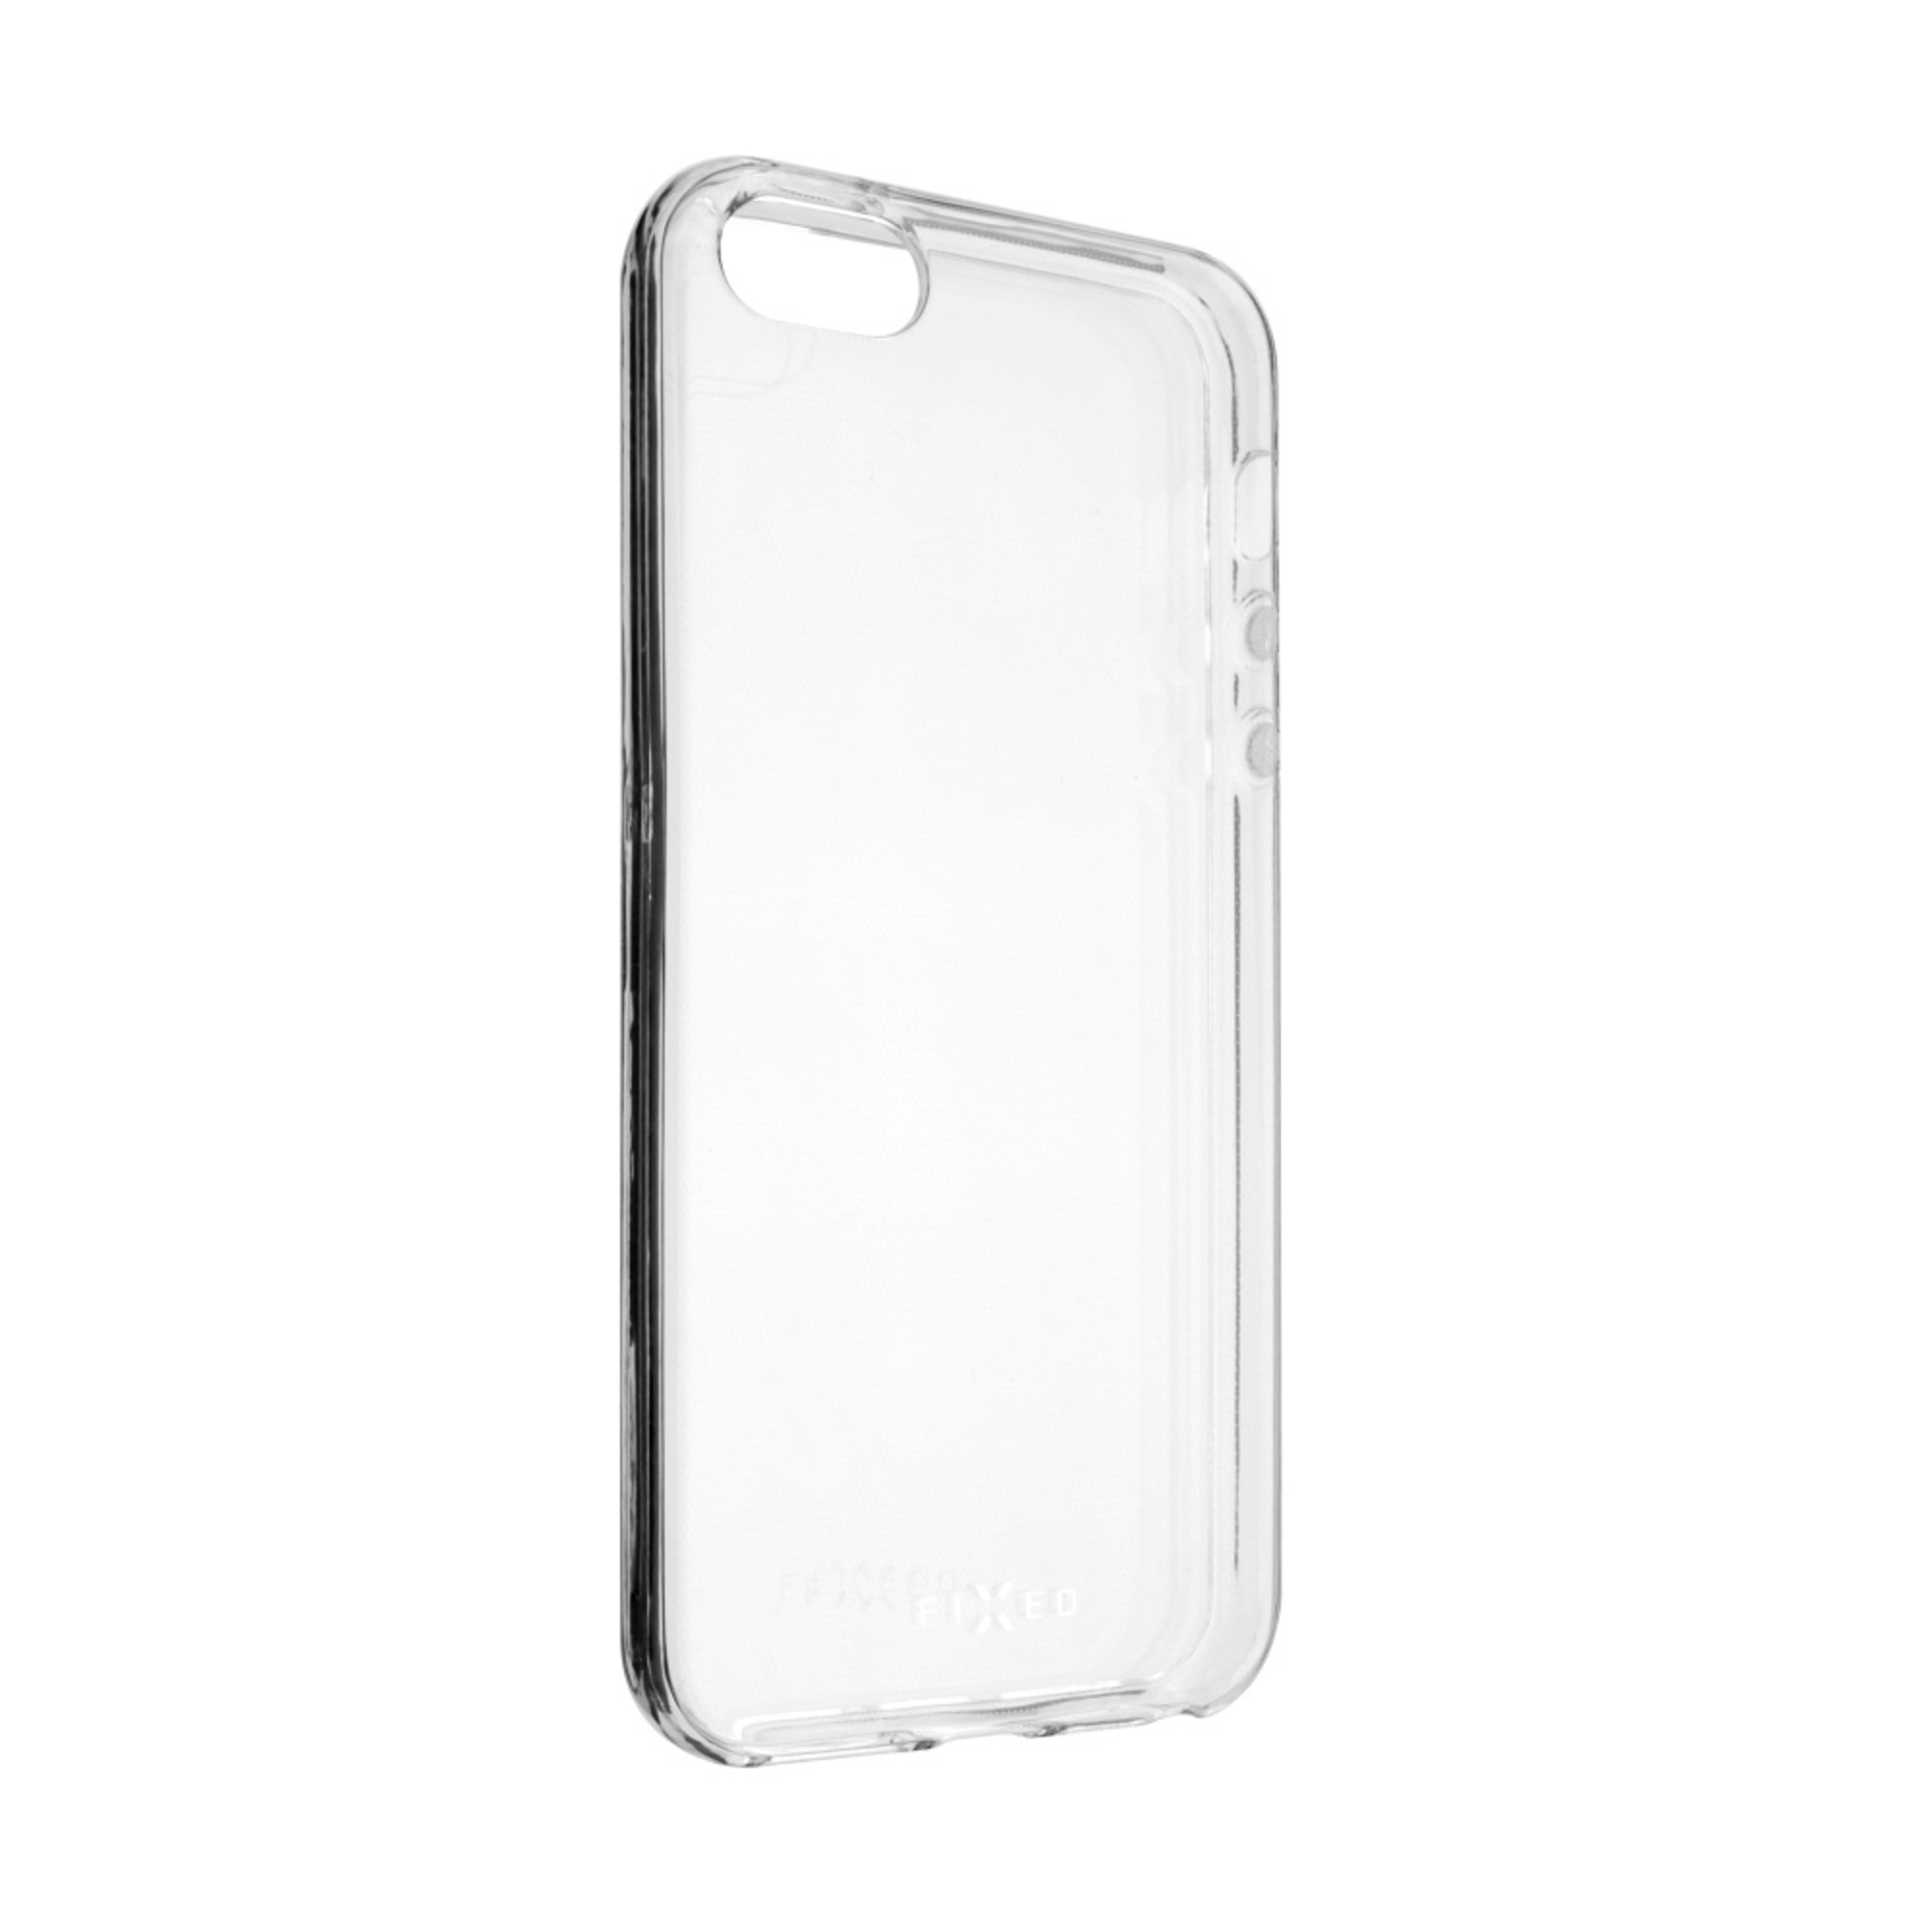 FIXED Gel-Hülle FIXTCC-002, iPhone Backcover, 5/5S/SE, Transparent Apple